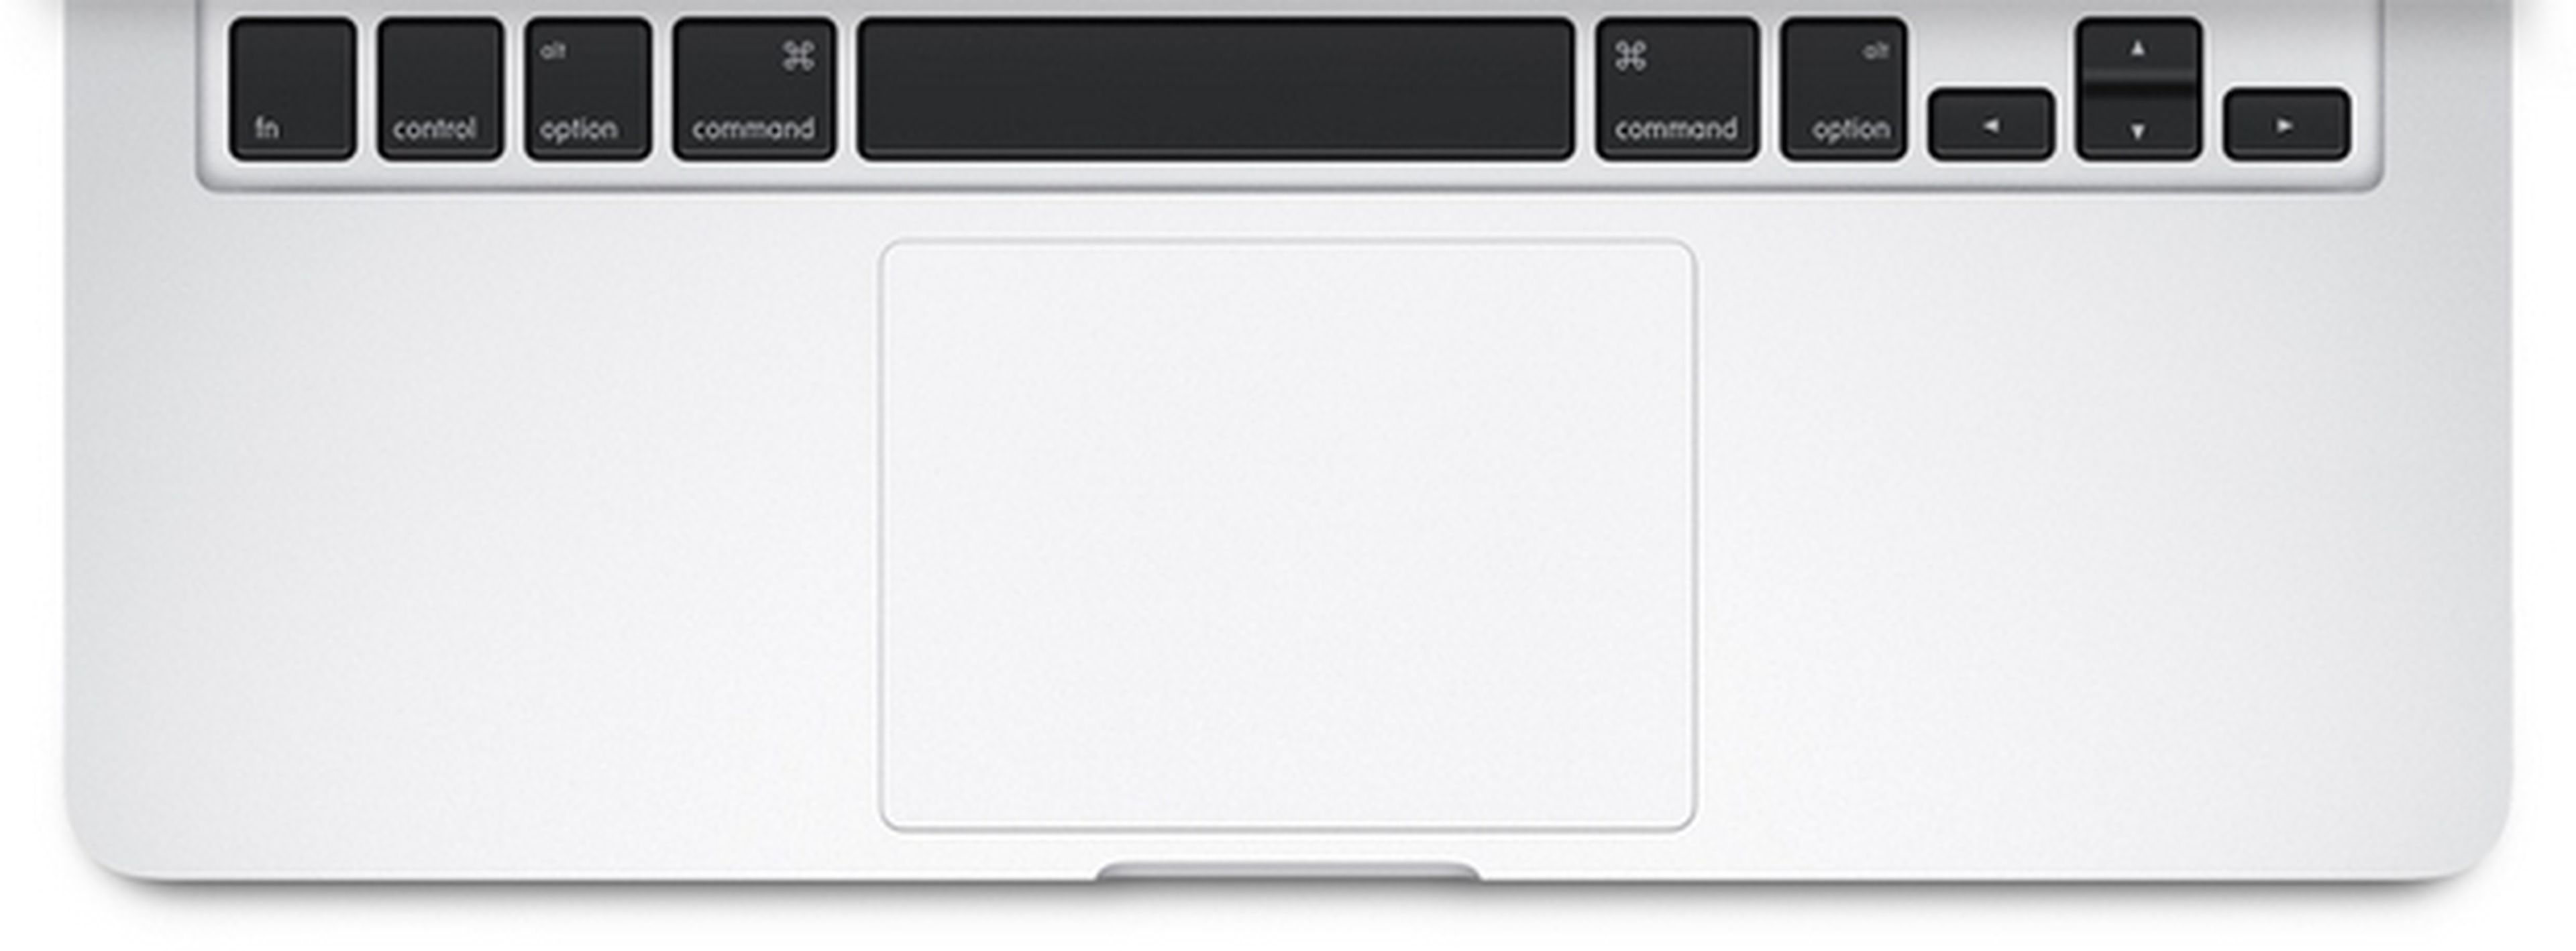 MacBook Pro 15 pulgadas